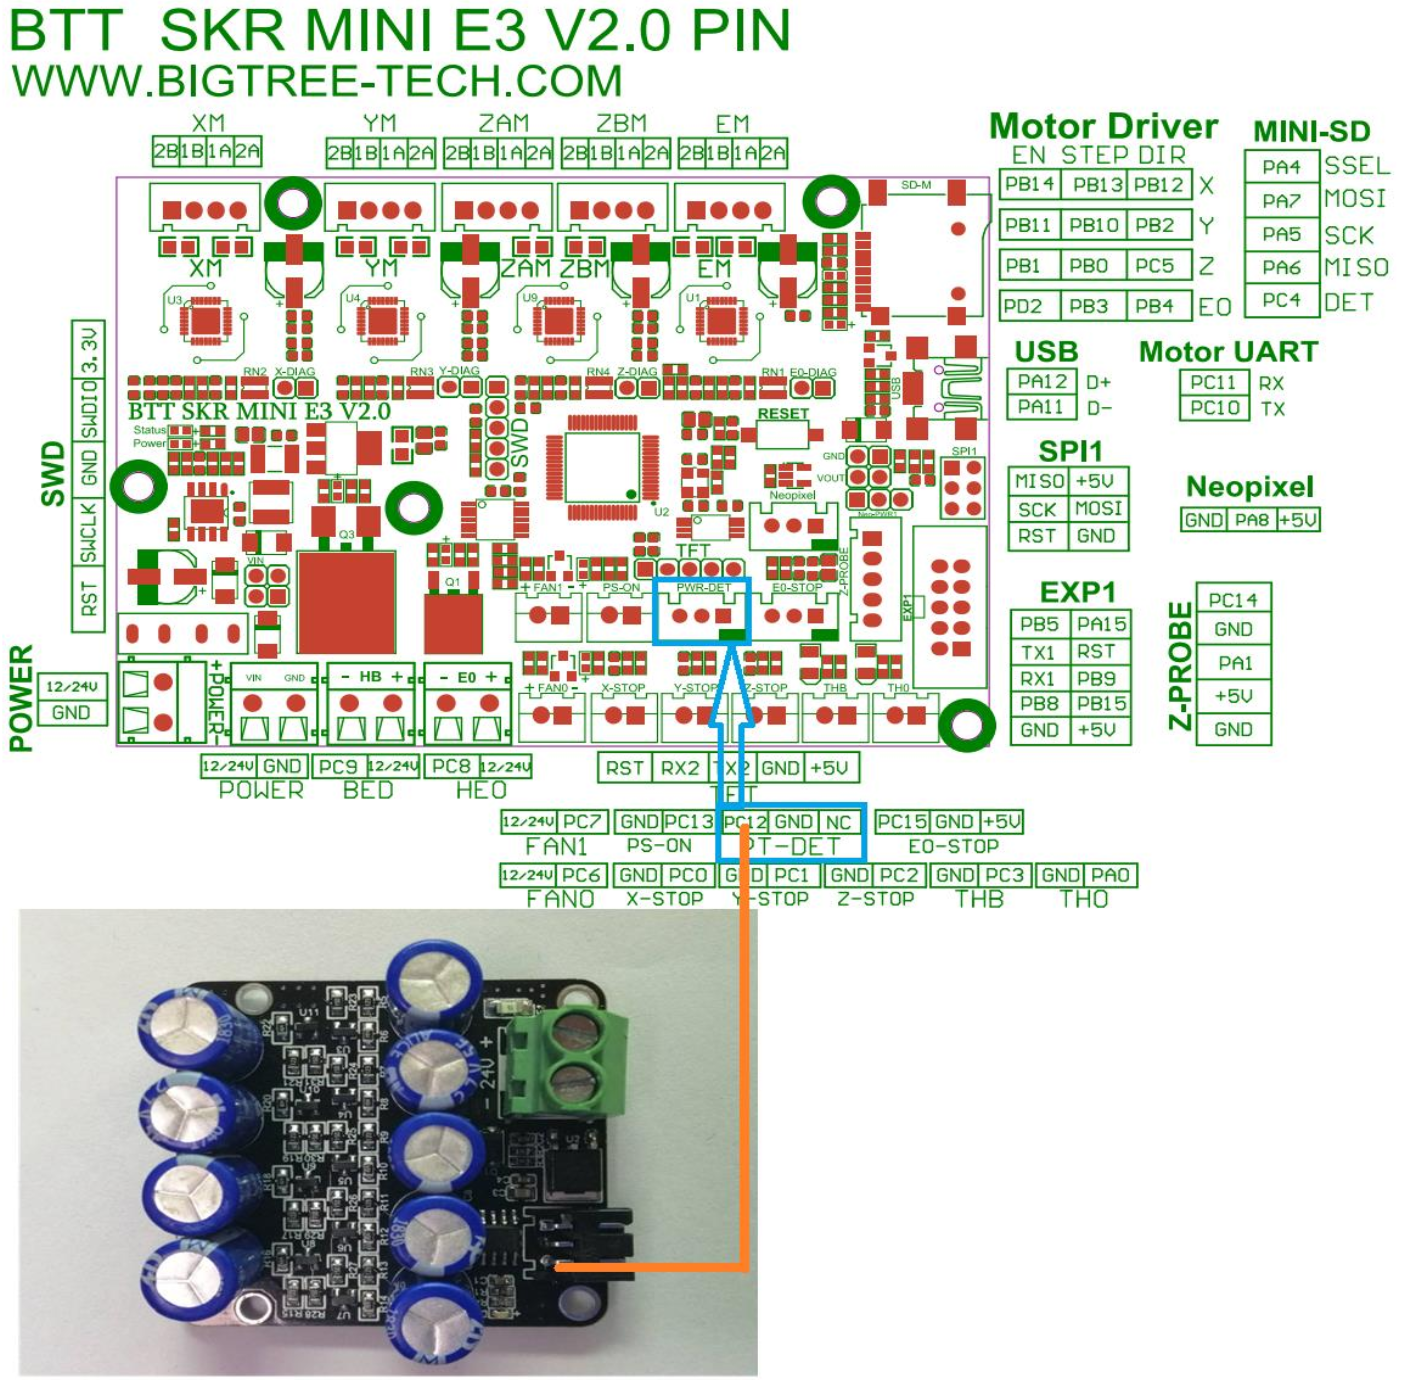 Skr Mini e3 v2.0. Skr Mini e3 v3.0 wiring. Bigtreetech skr Mini e3 v2.0. Skr Mini e3 v3 Pin.